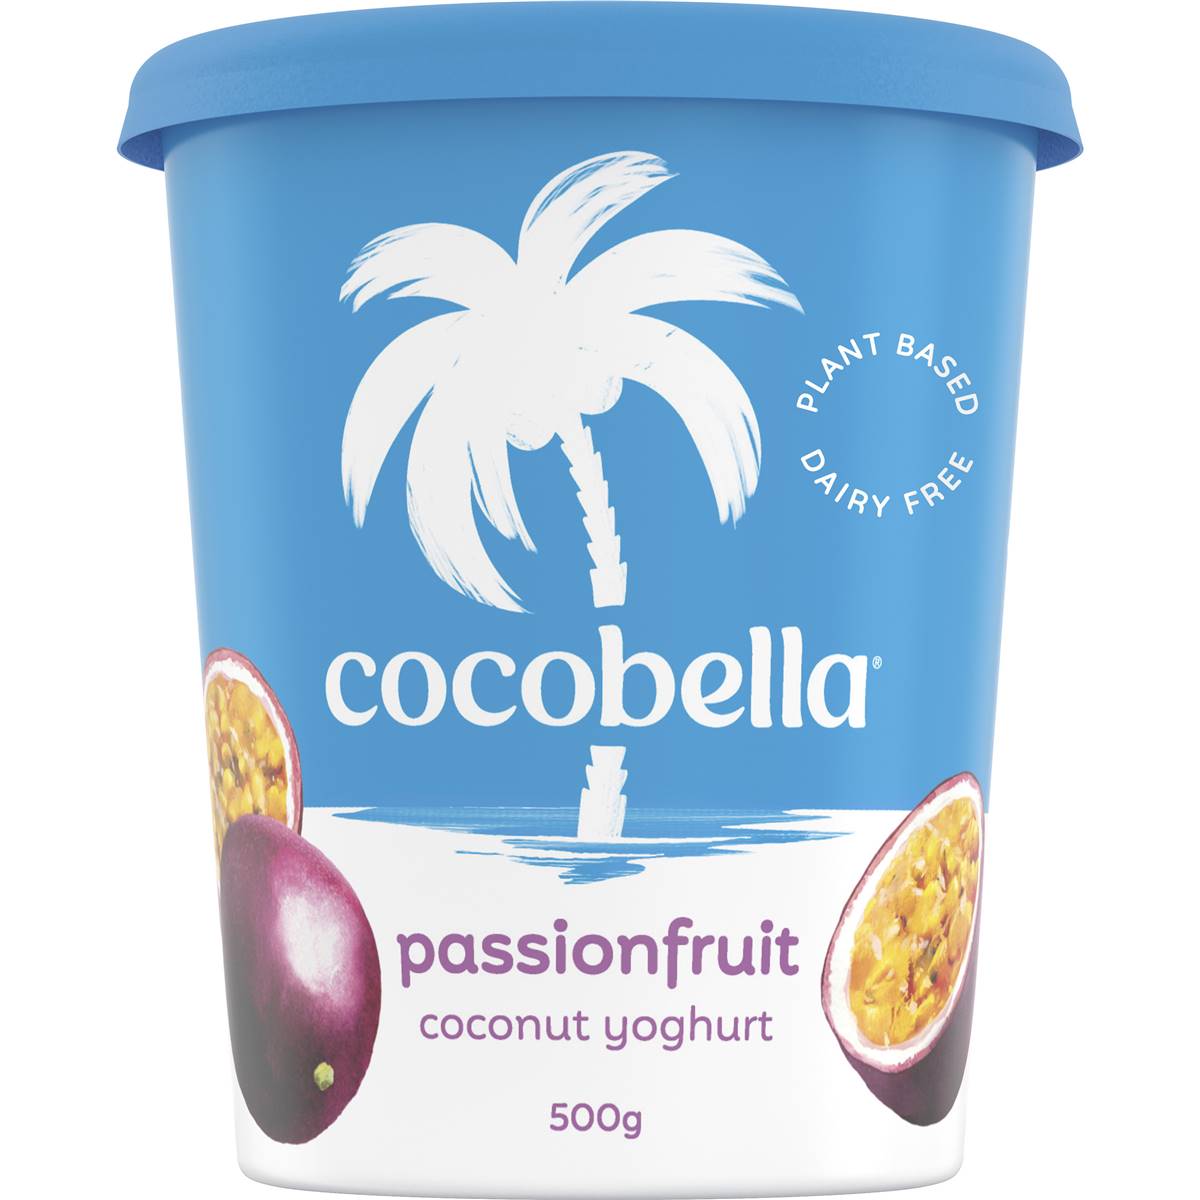 Calories in Cocobella Cocobella Yoghurt Passionfruit